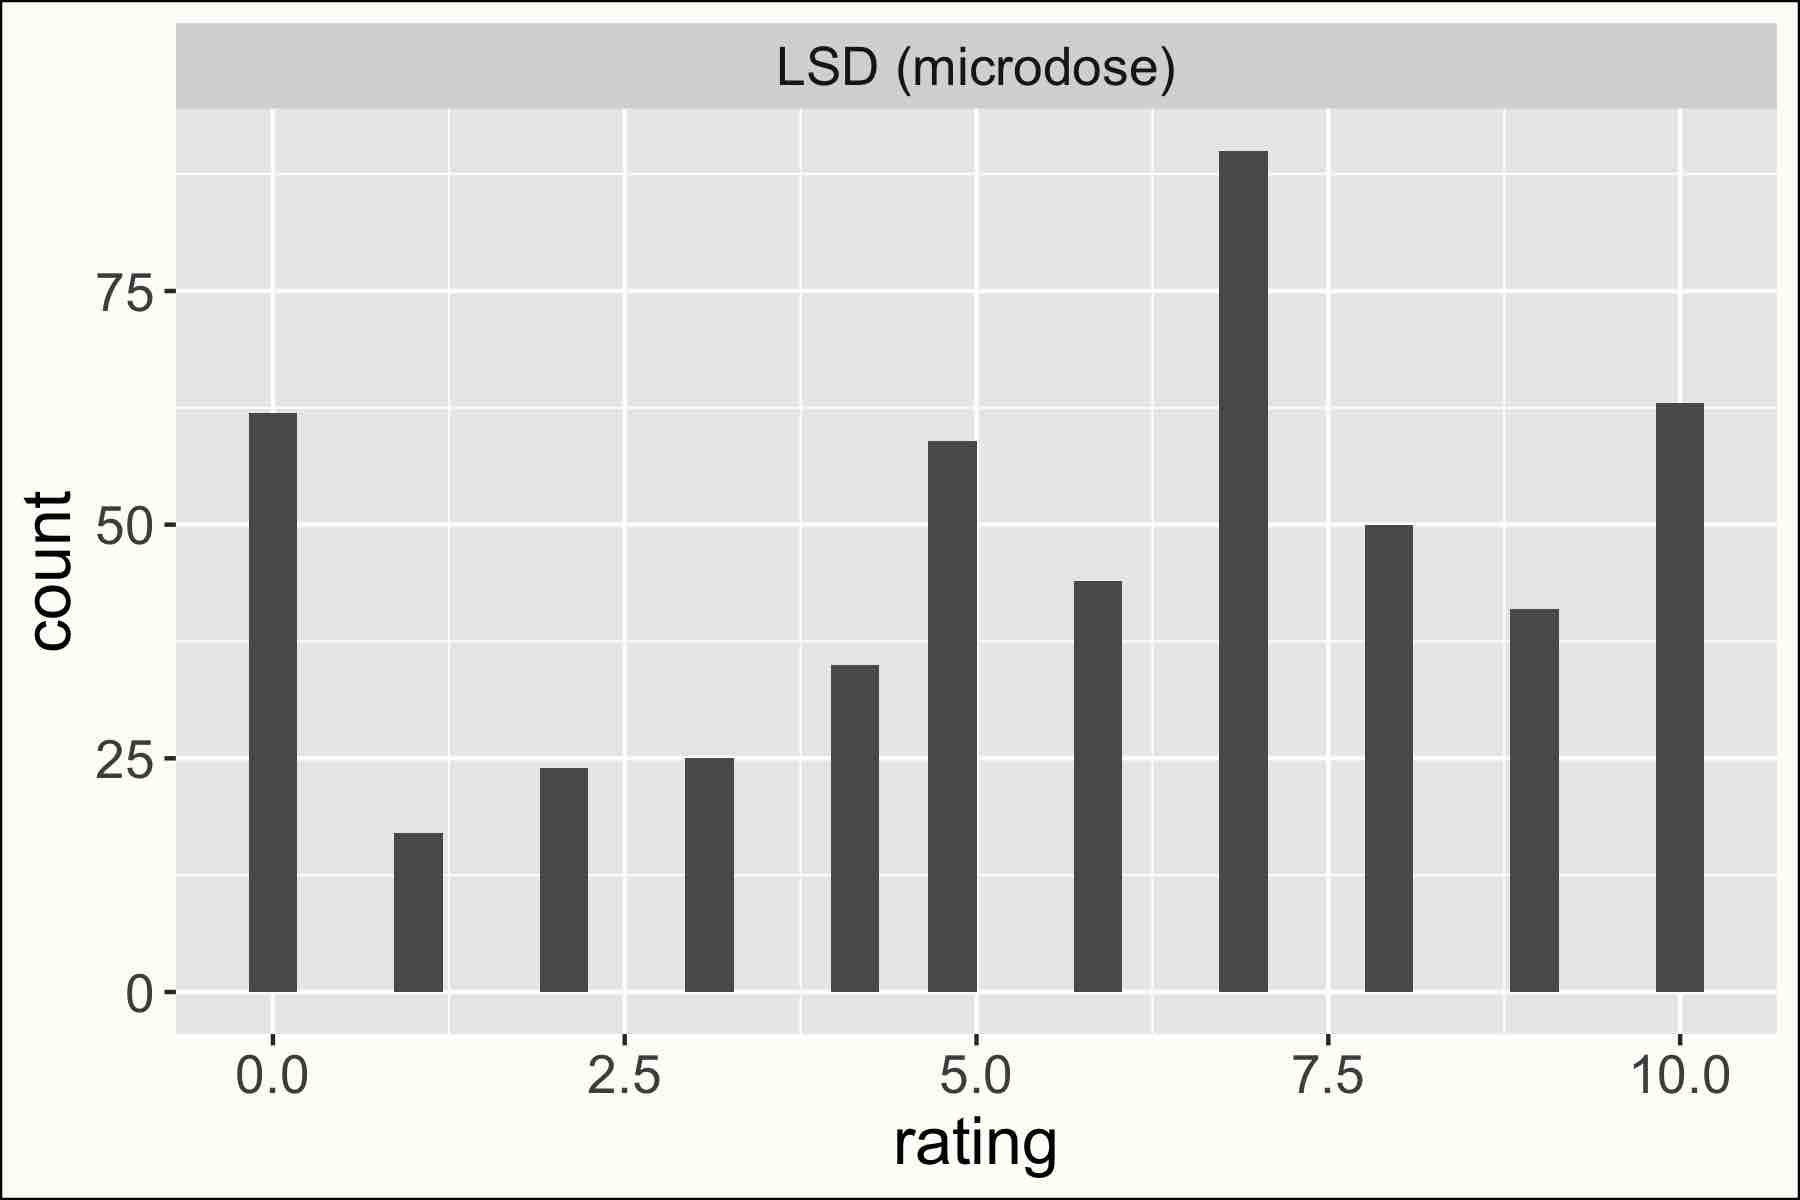 l_micro_rating_distrib